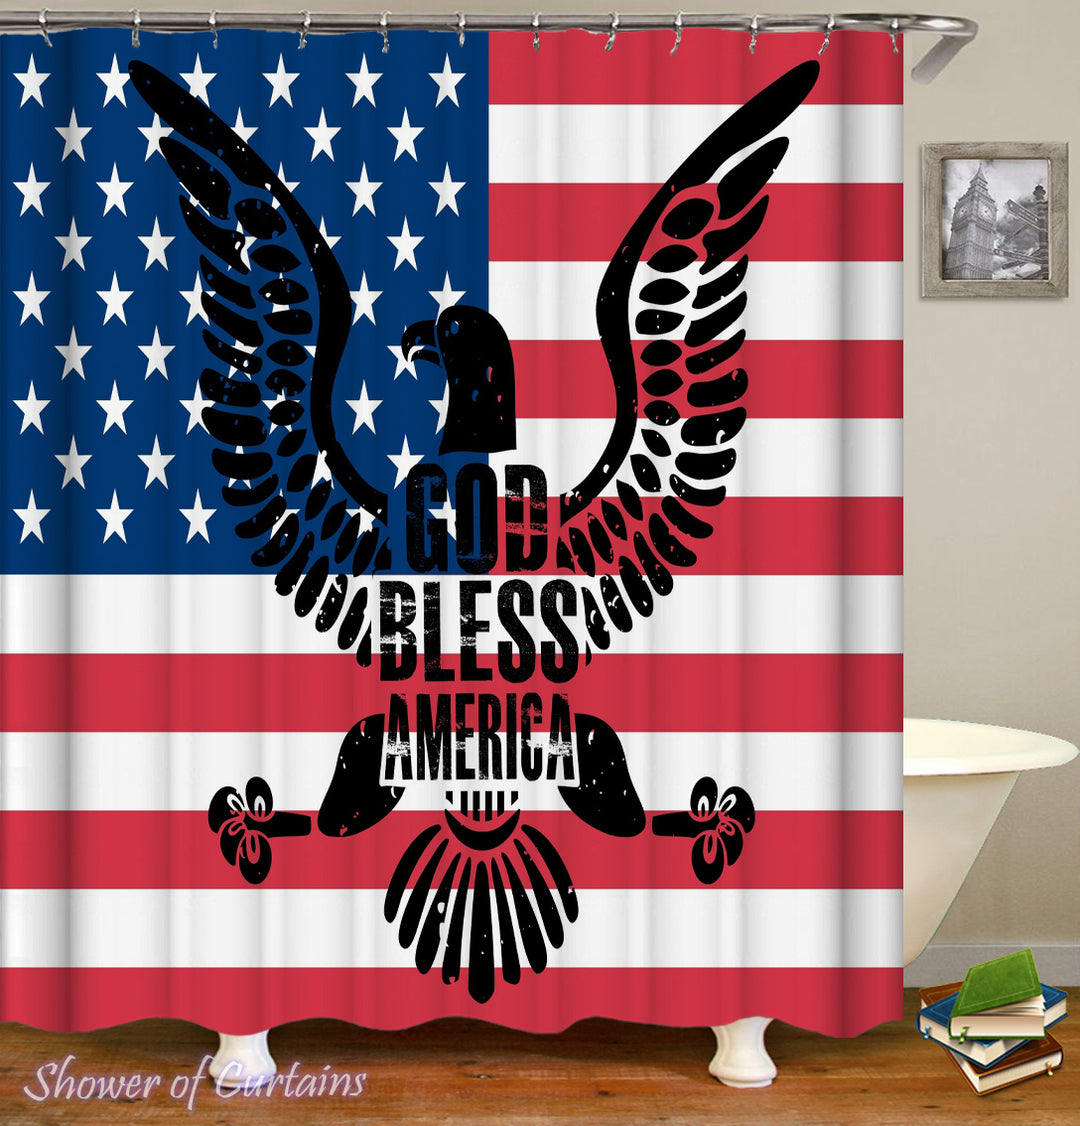 American flag Shower curtain